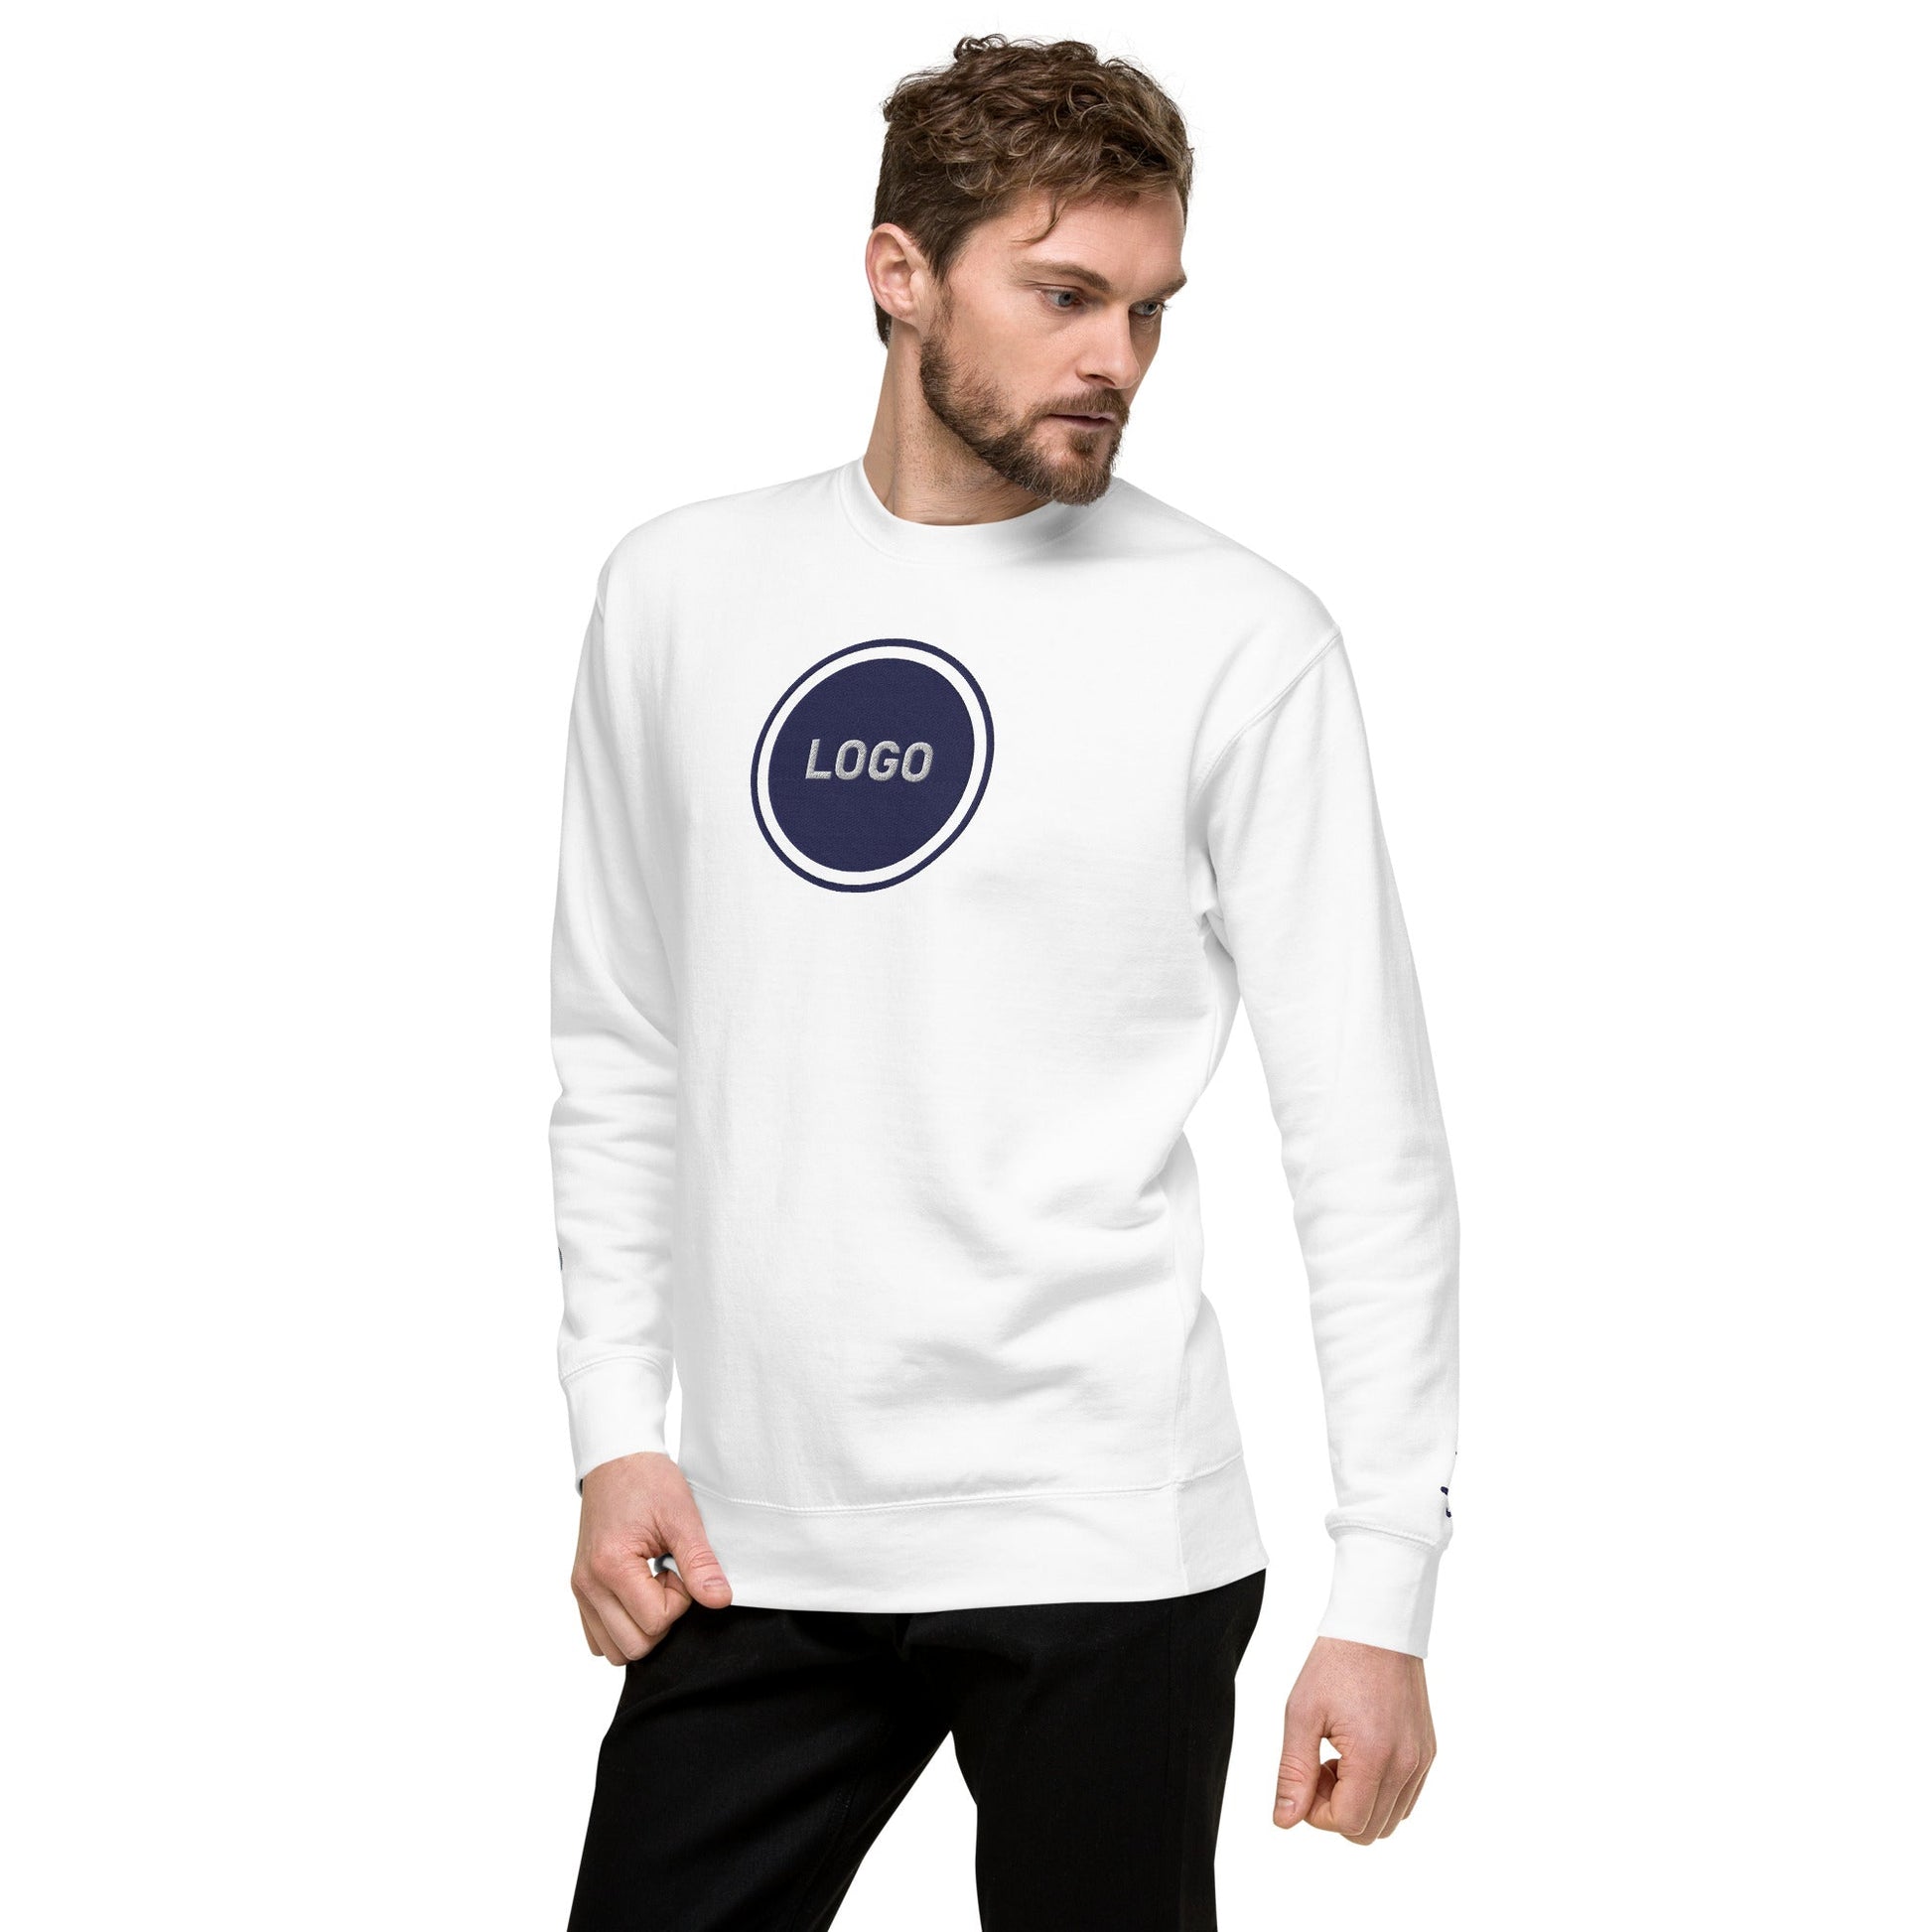 TIME OF VIBES - Unisex Premium Sweatshirt Demo CORPORATE - €69.00